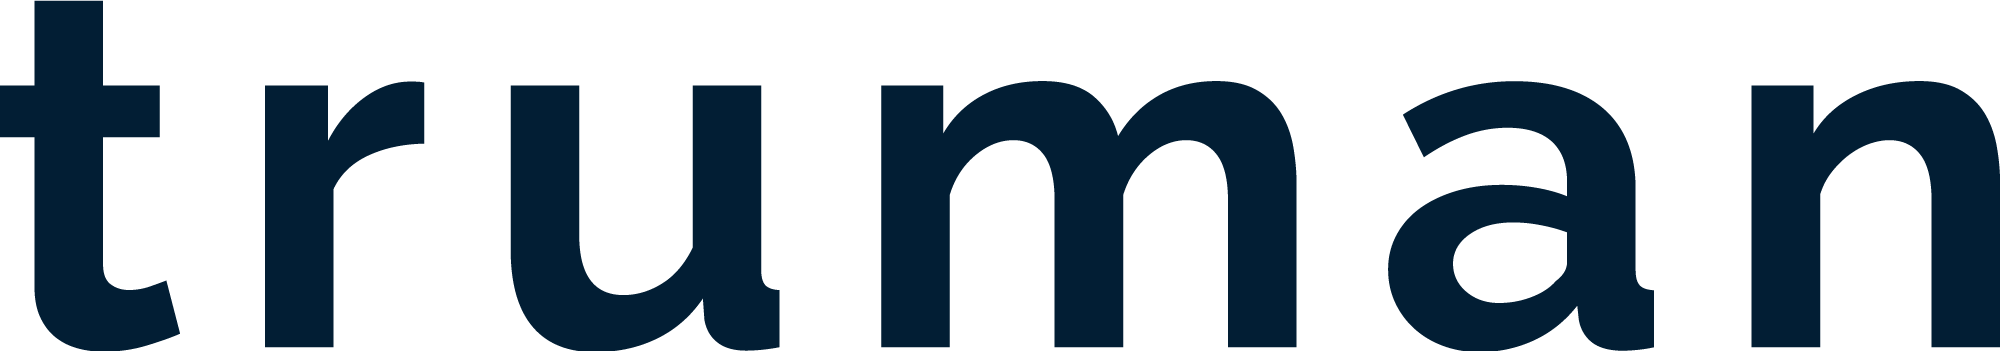 Truman logo